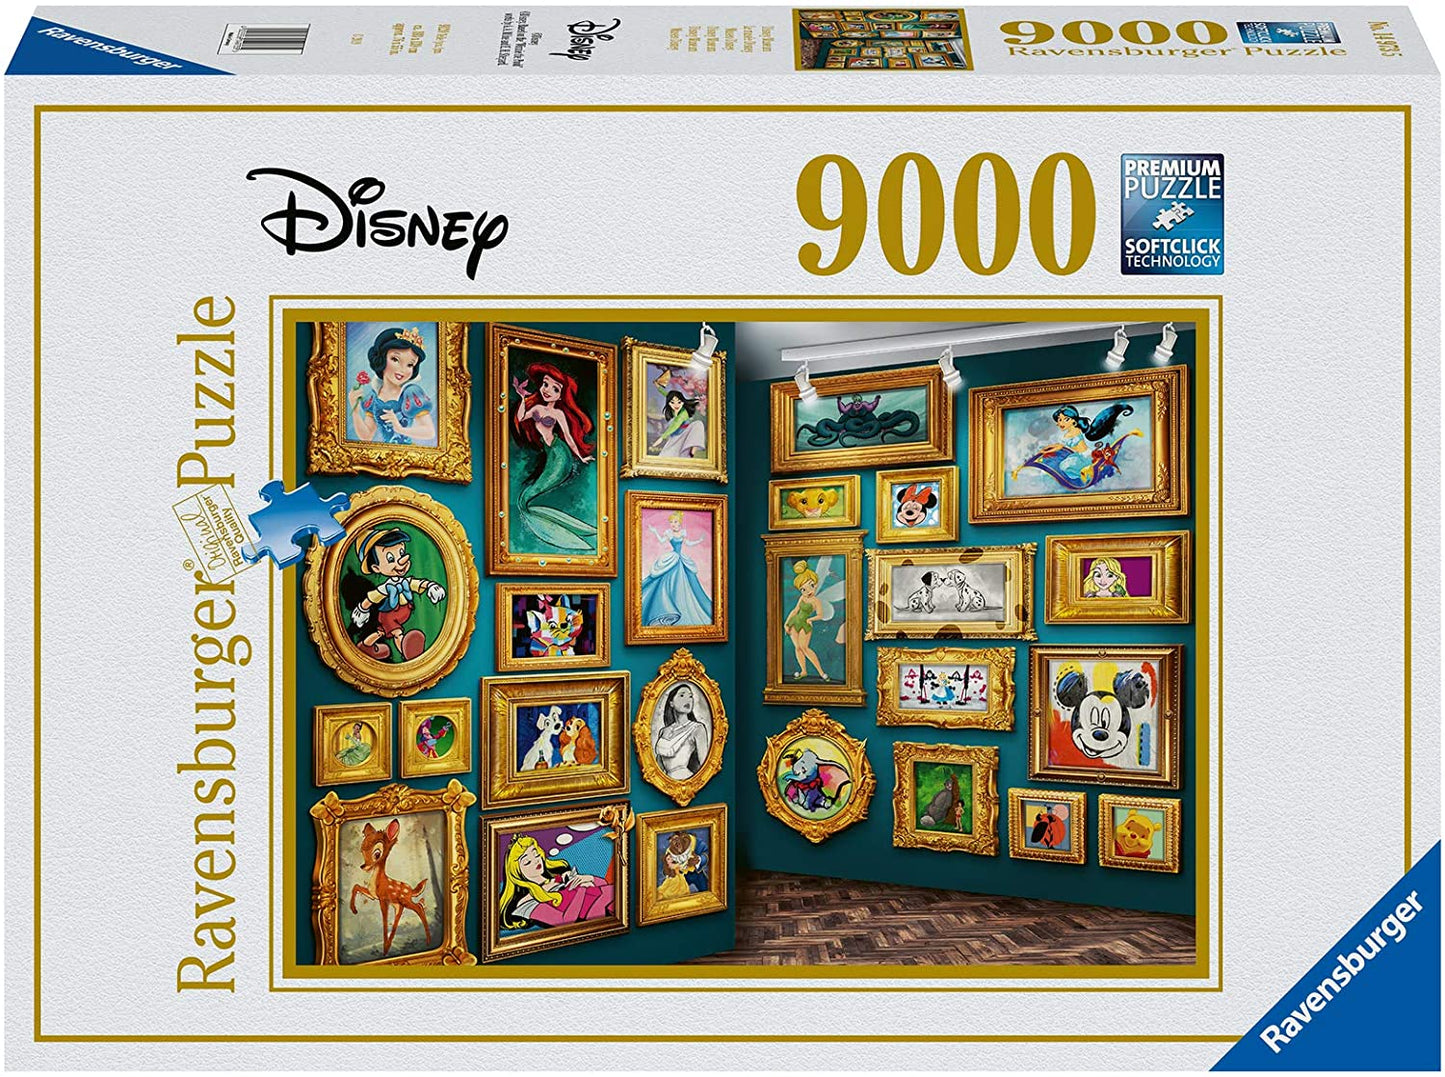 Disney Museum by Disney, 9000 Piece Puzzle